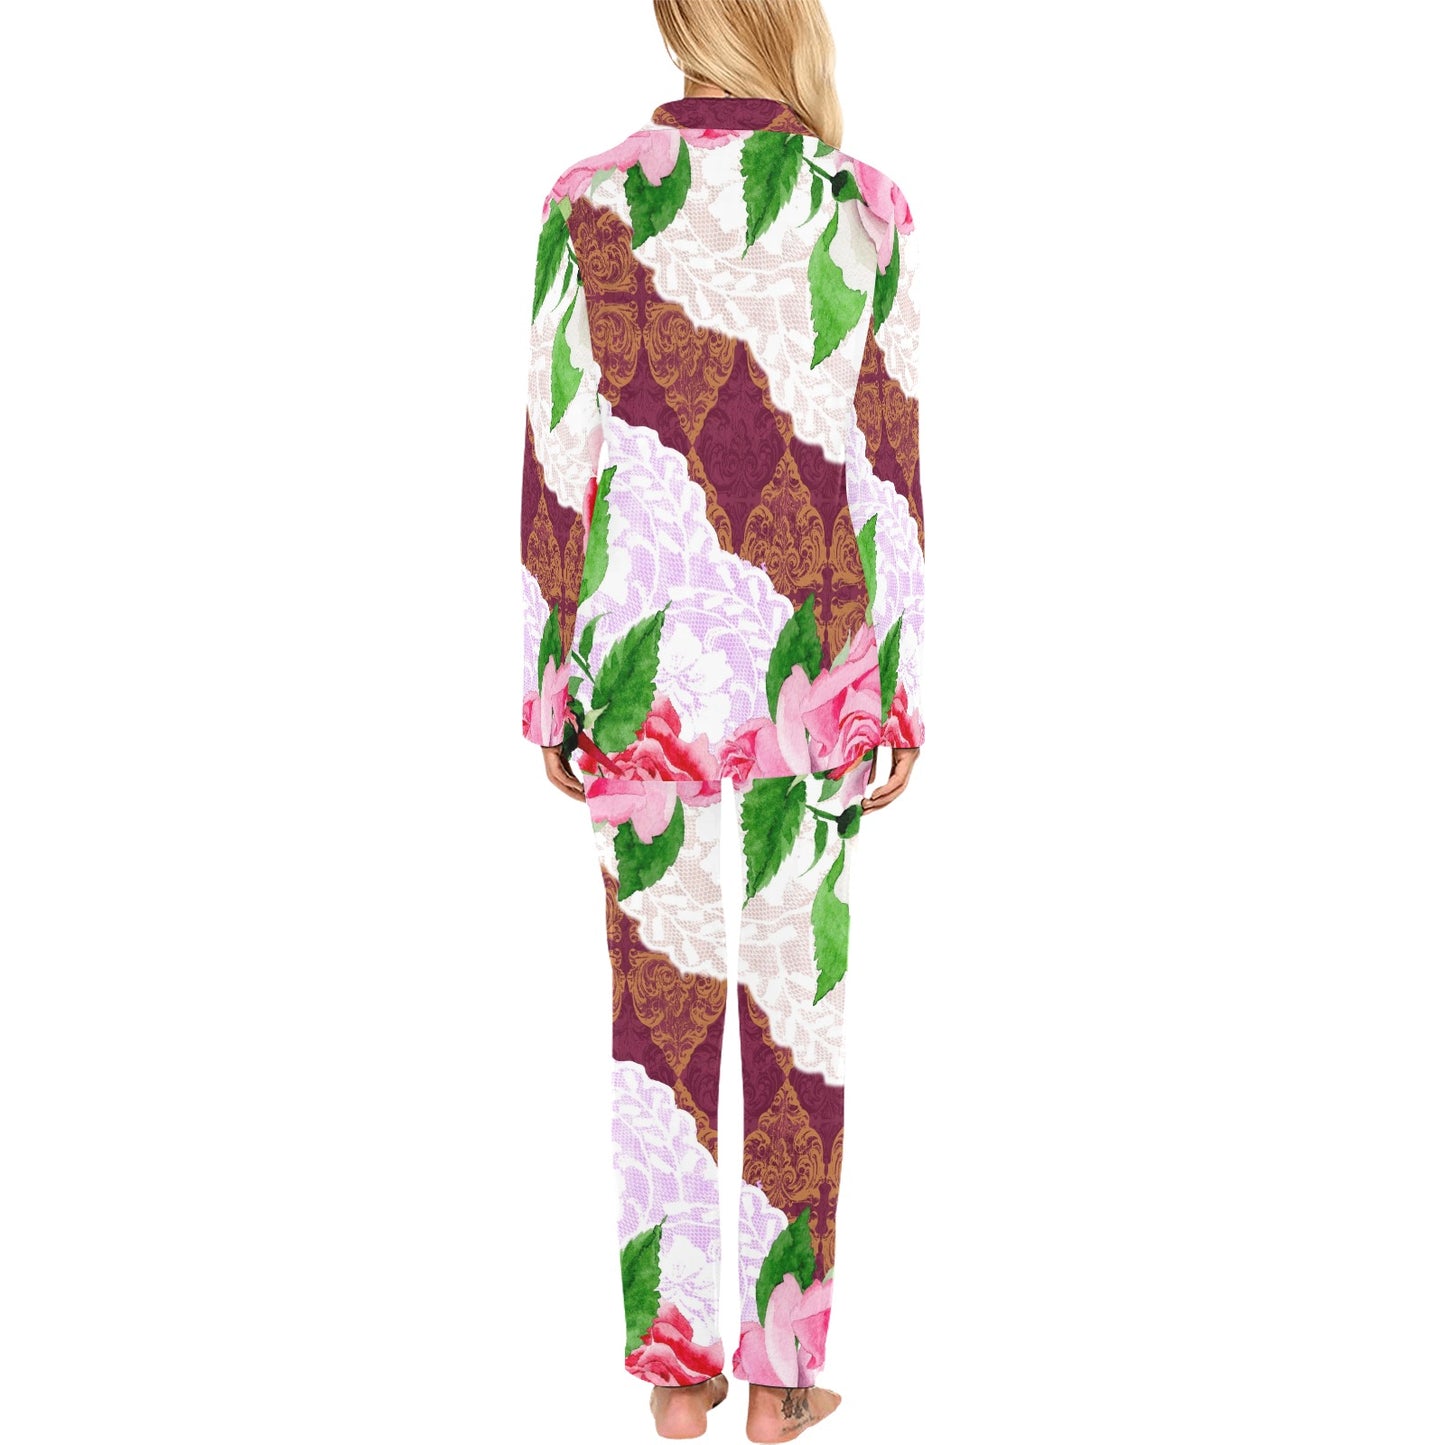 Victorian printed lace pajama set, design 19 Women's Long Pajama Set (Sets 02)